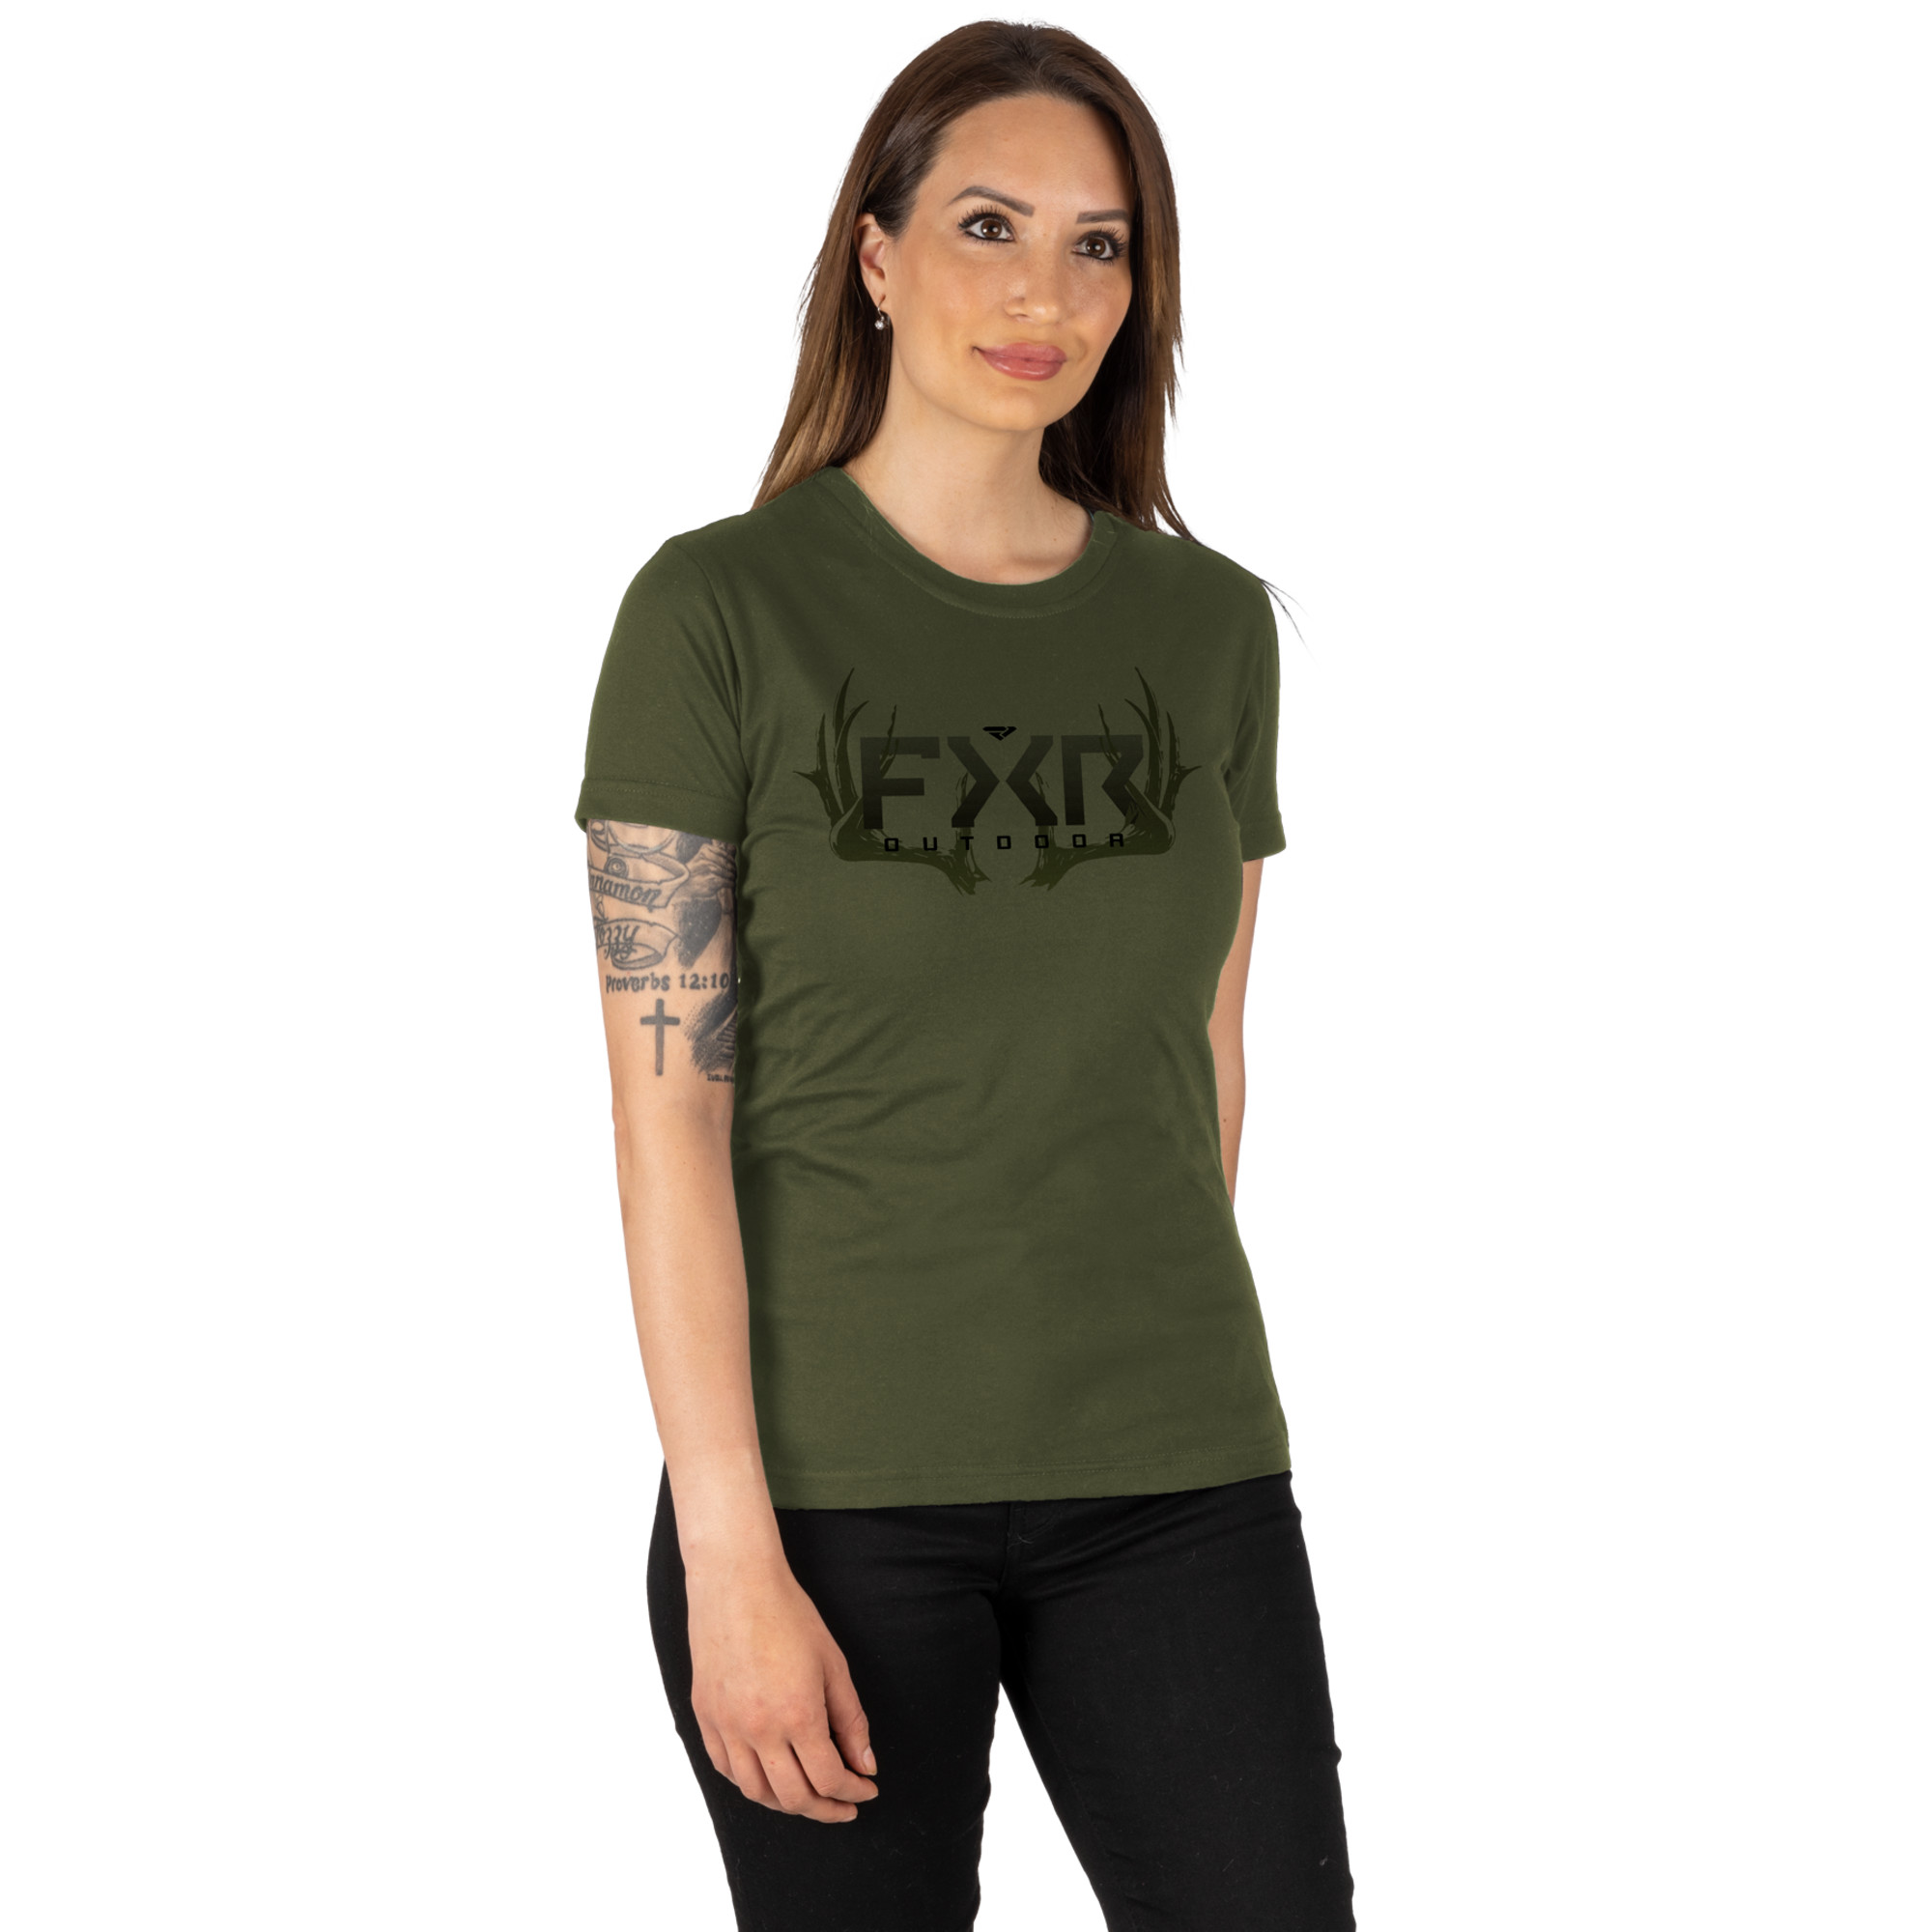 fxr racing t-shirt shirts for womens antler premium